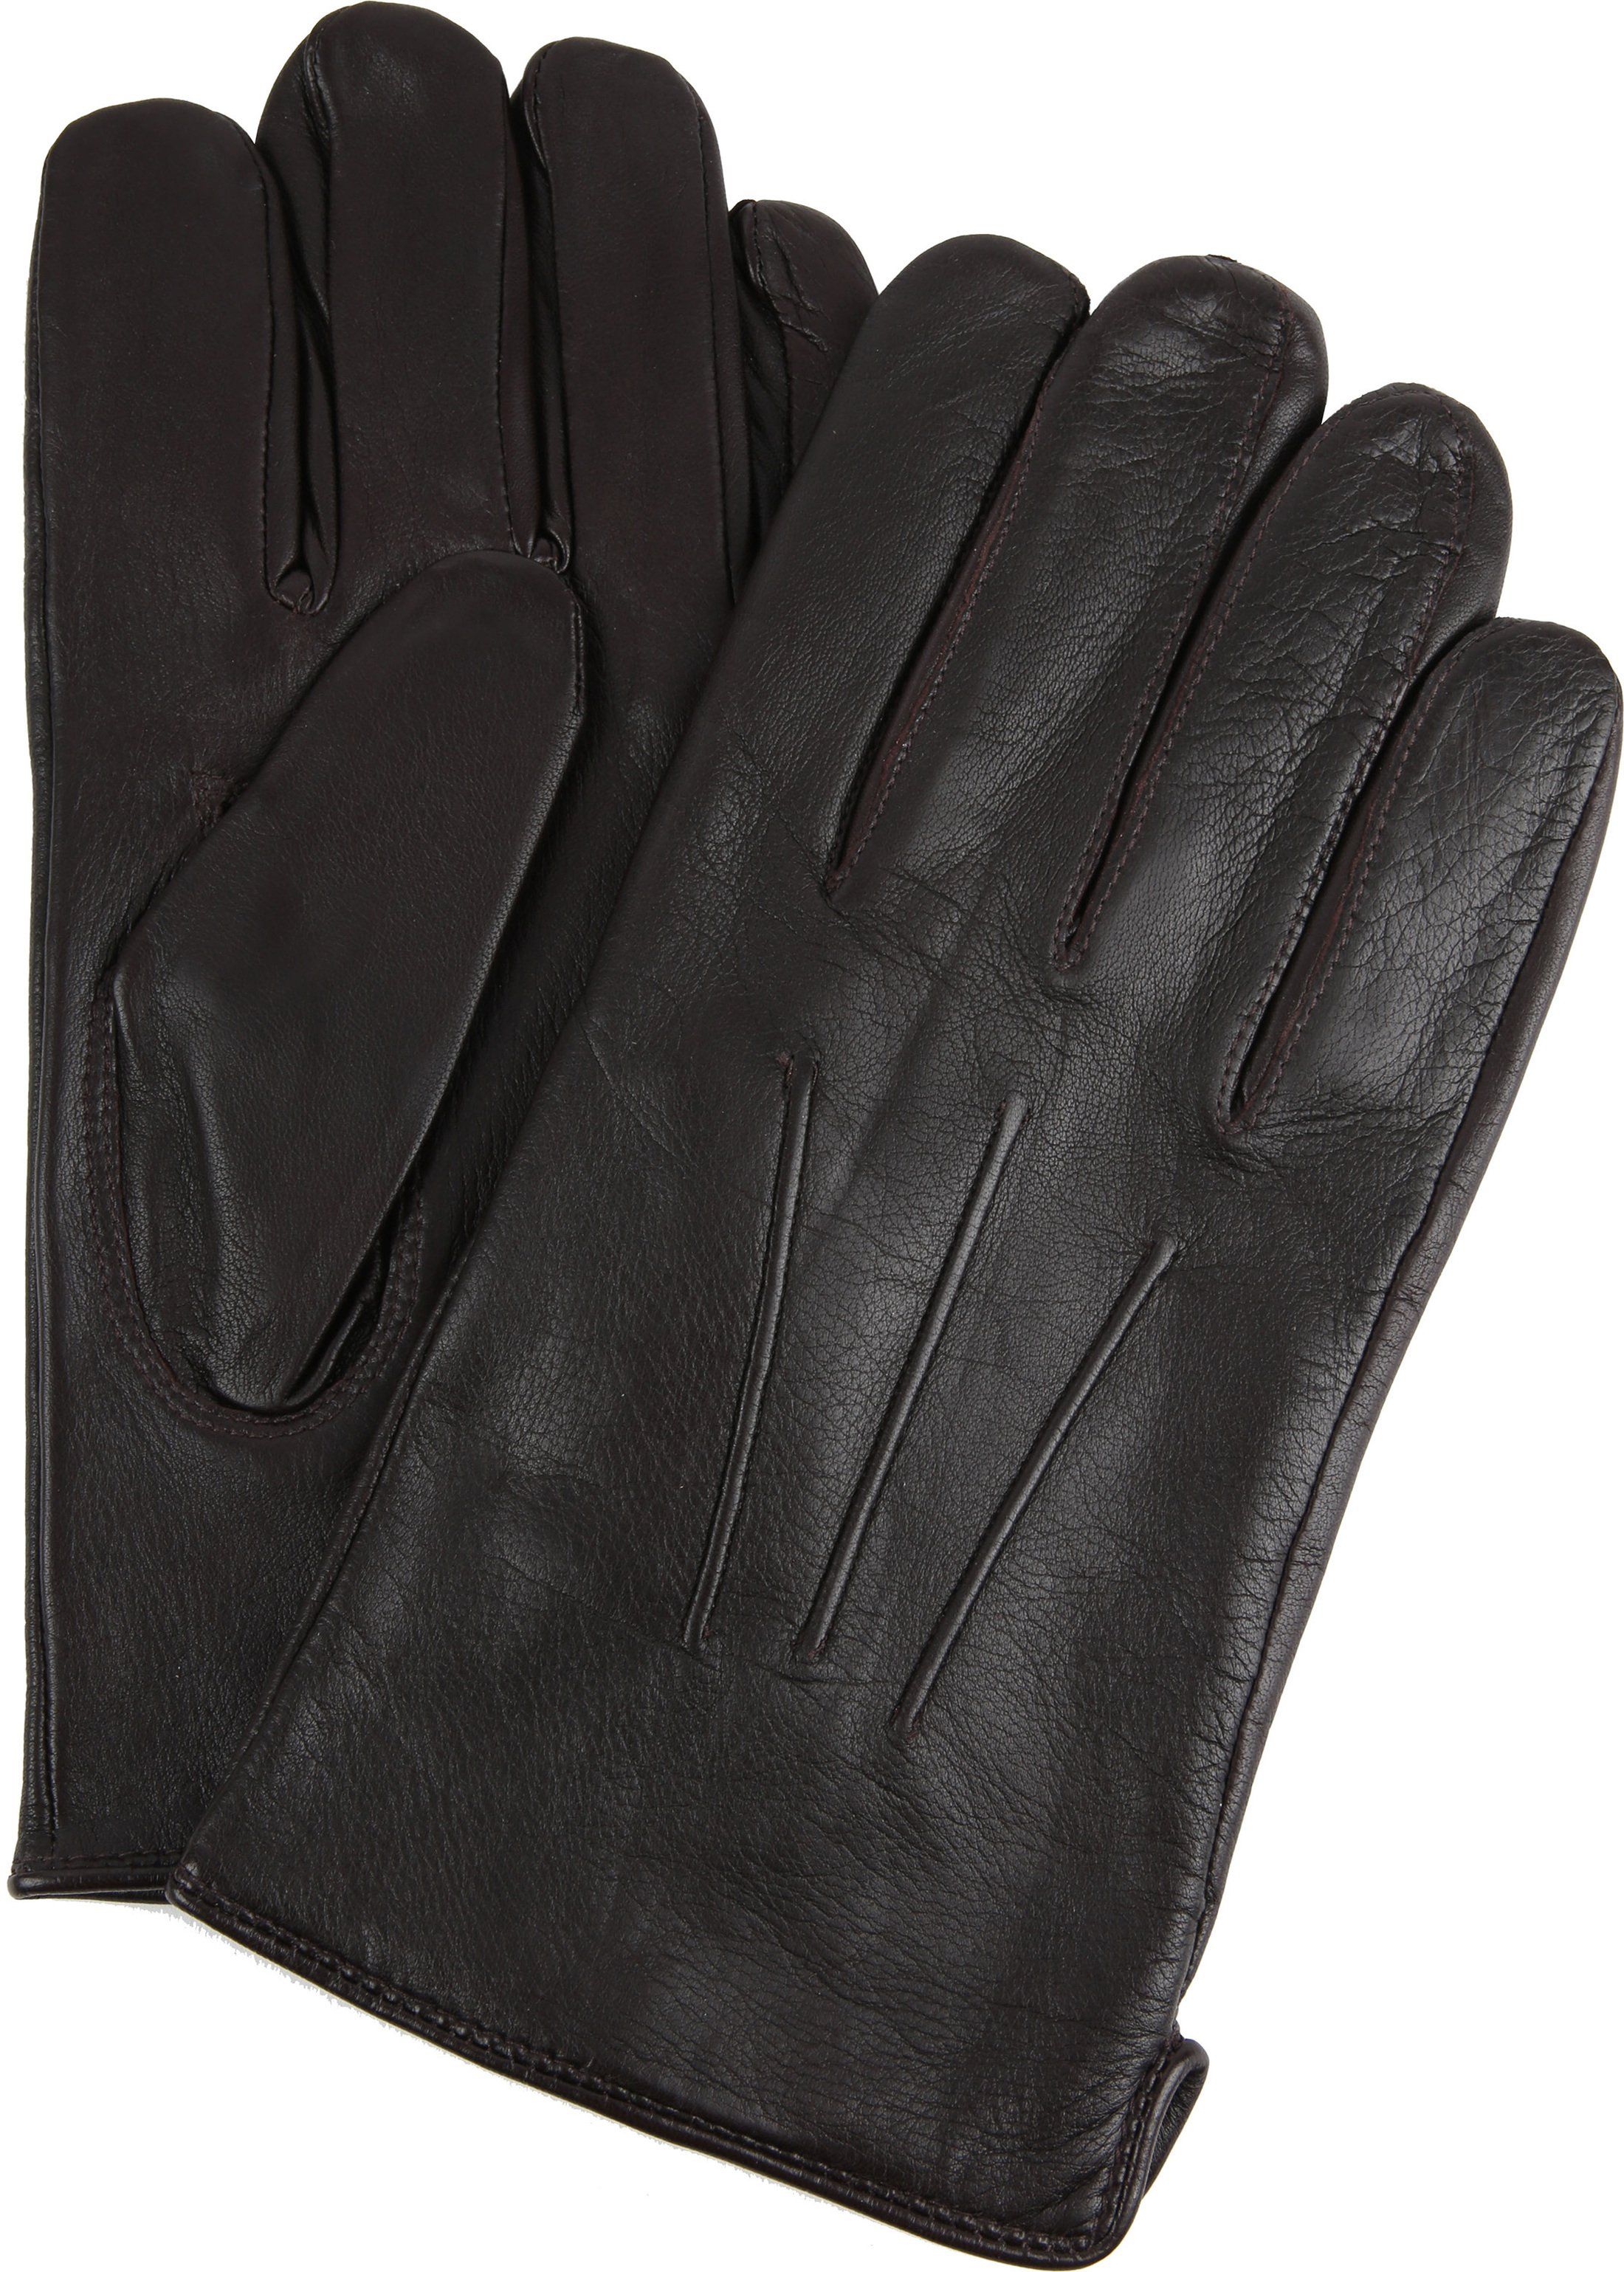 Laimbock Gloves Edinburgh (Espresso) Brown size 10